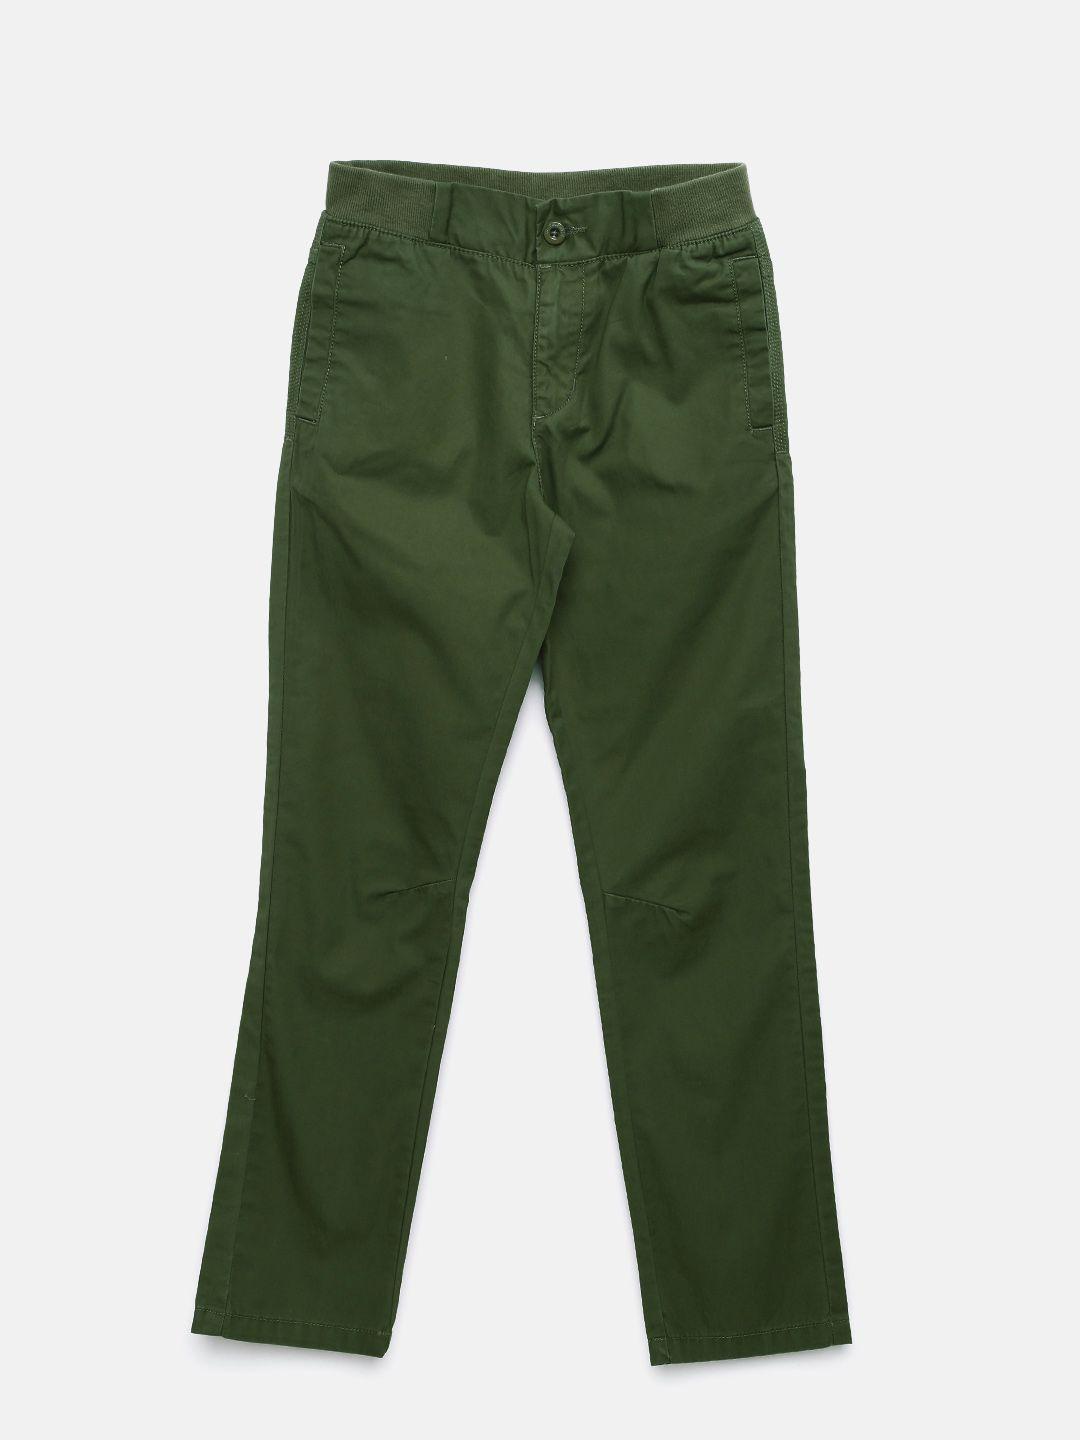 U.S. Polo Assn. Kids Boys Olive Green Regular Fit Solid Regular Trousers